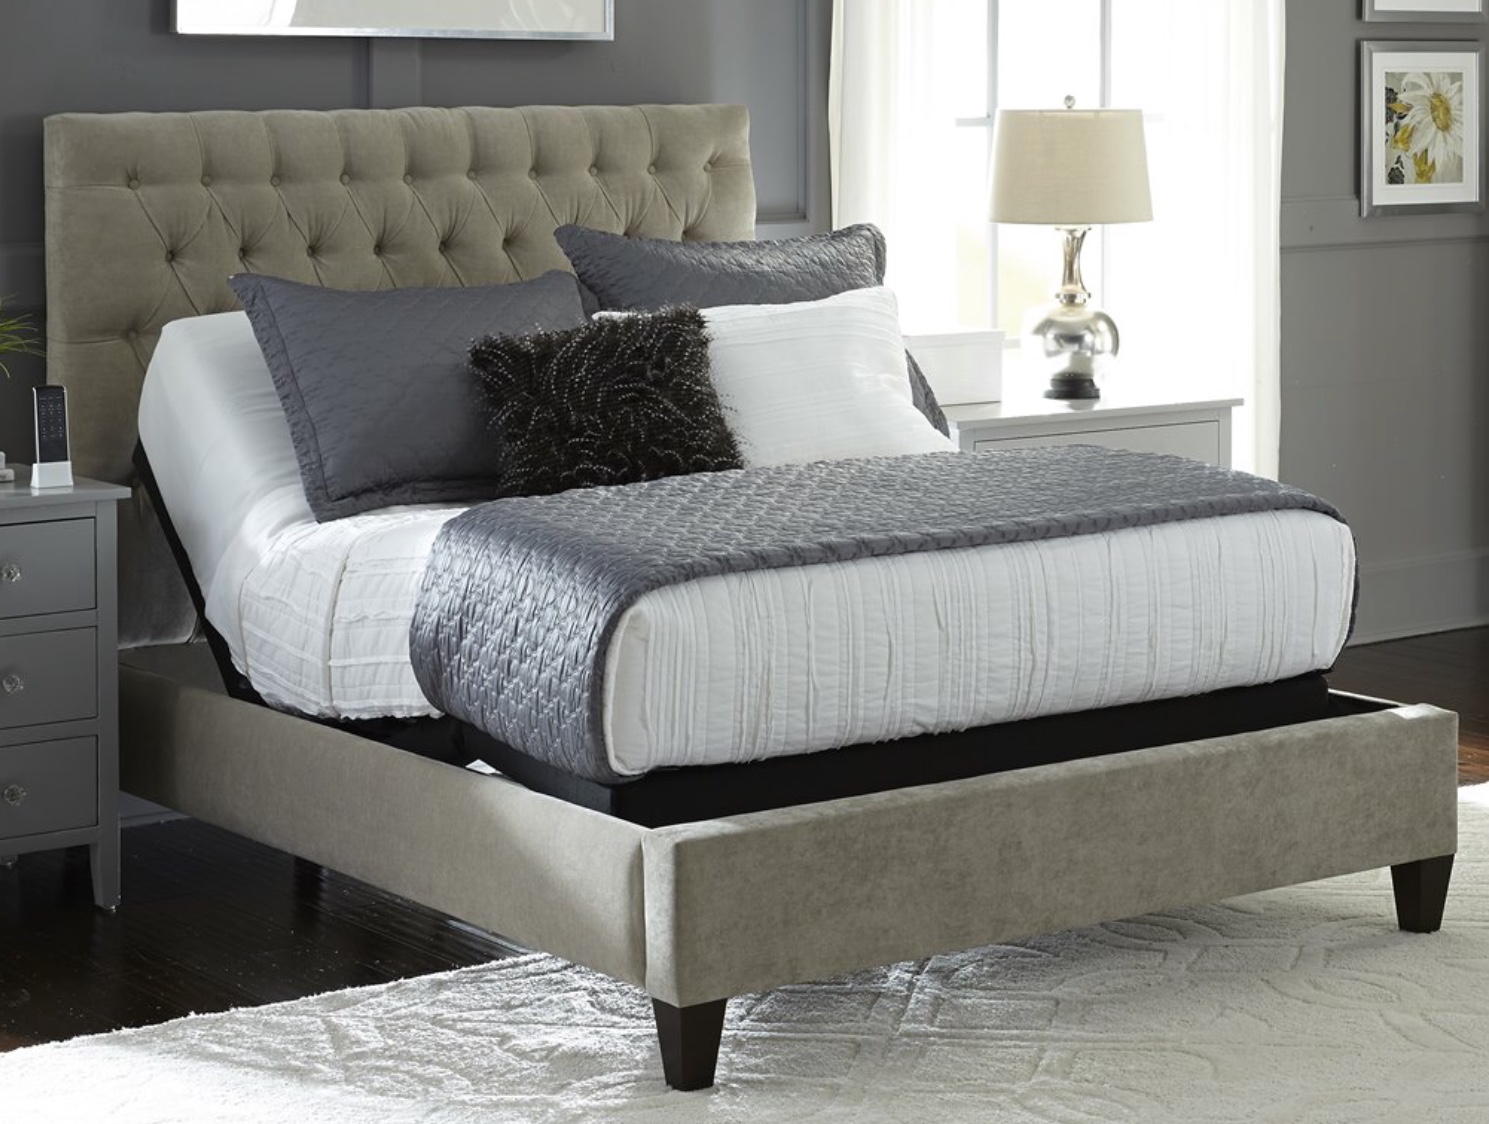 prodigy comfort elite adjustable bed showroom Ontario